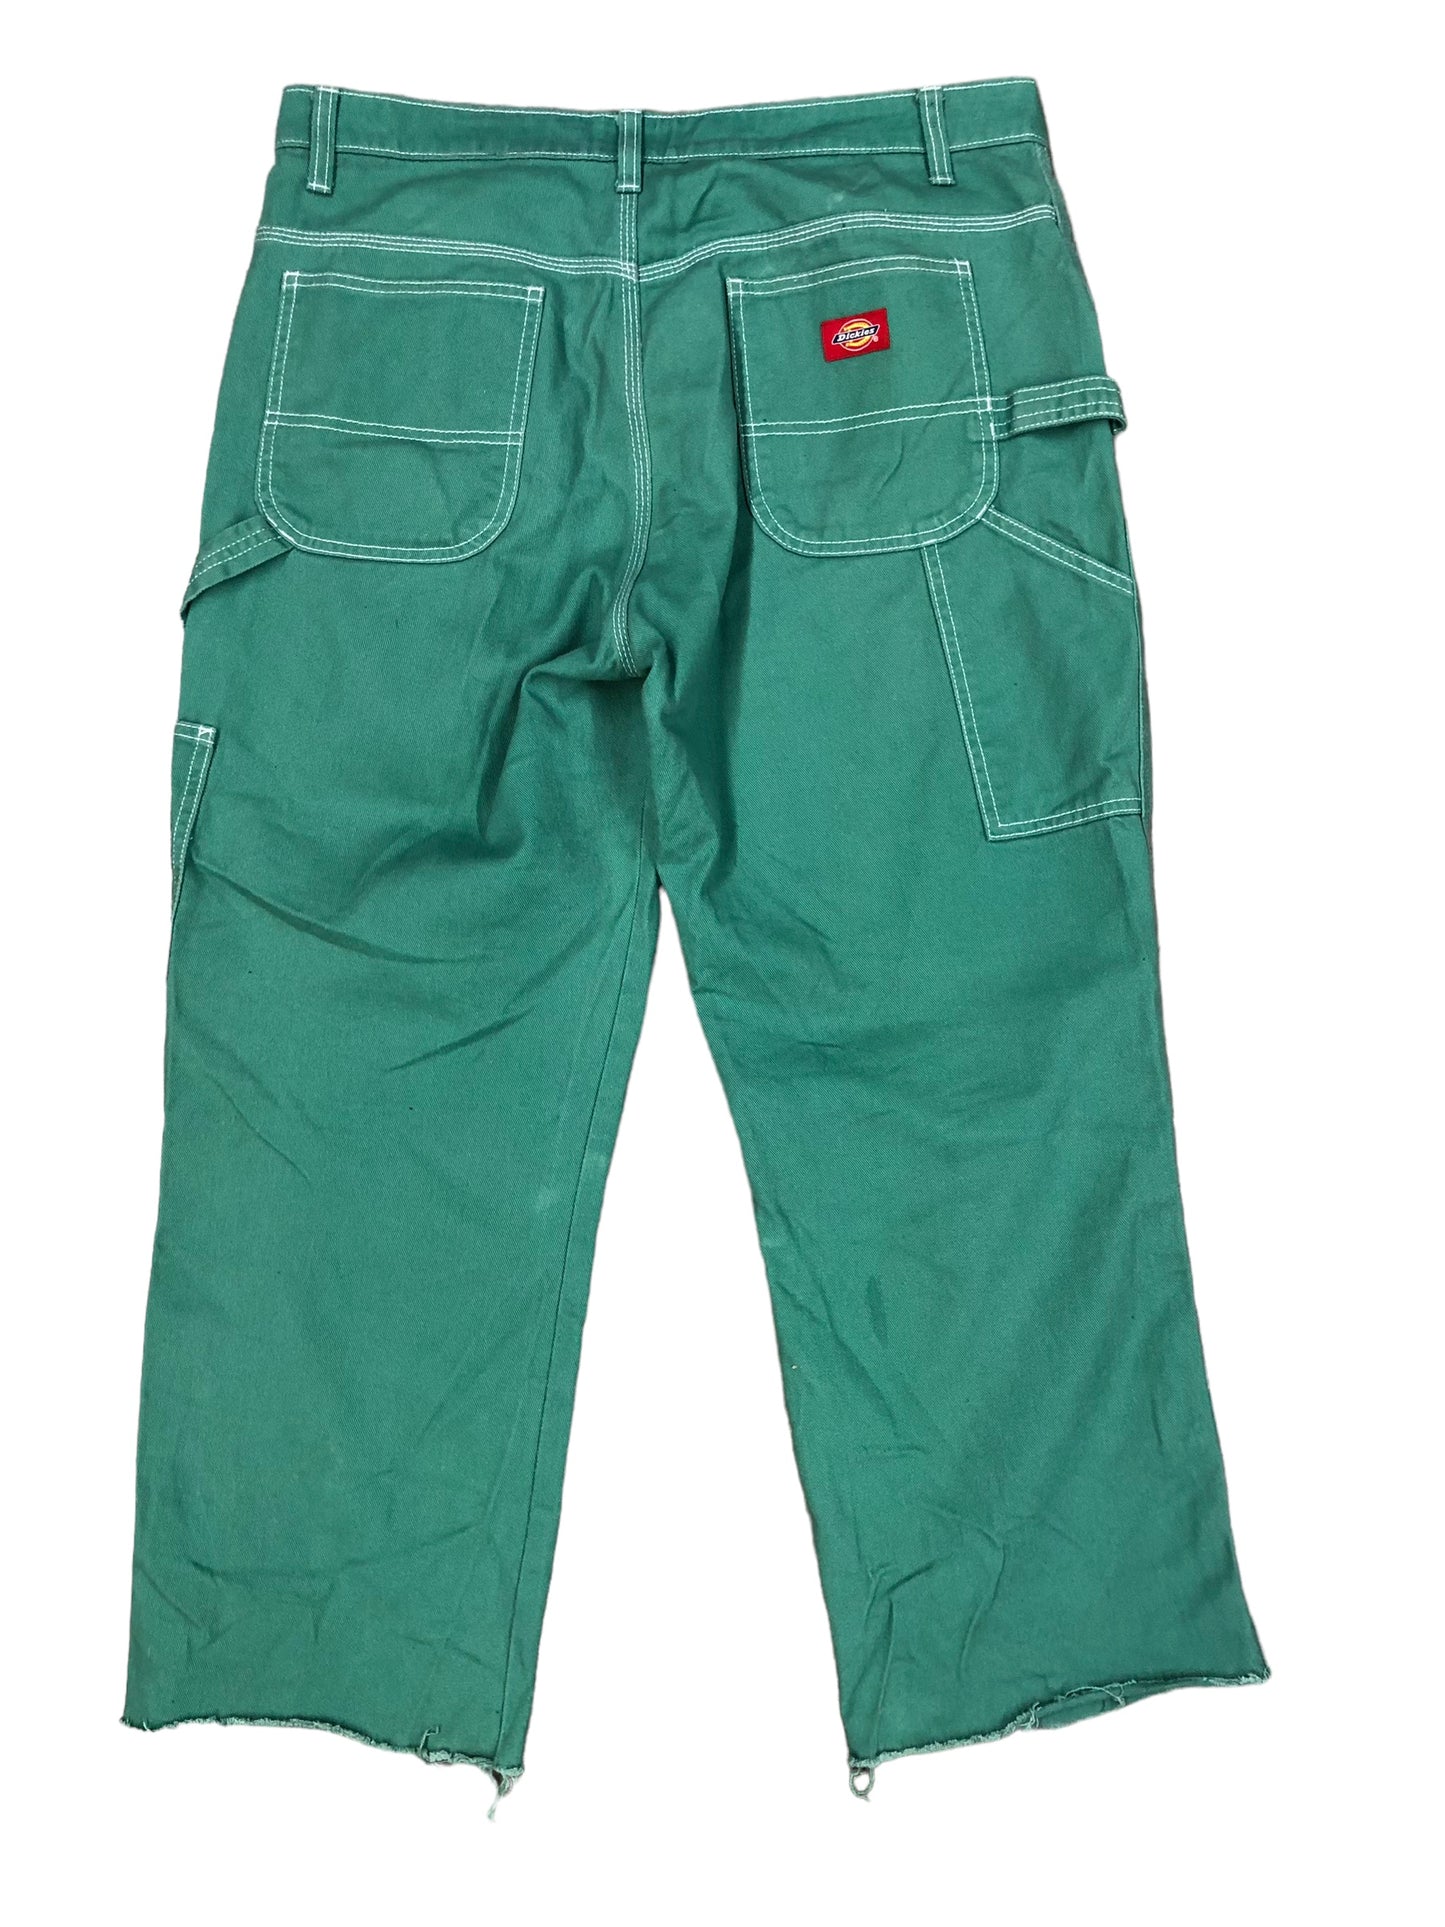 VTG Dickies Green Carpenter Pants Sz  34x25